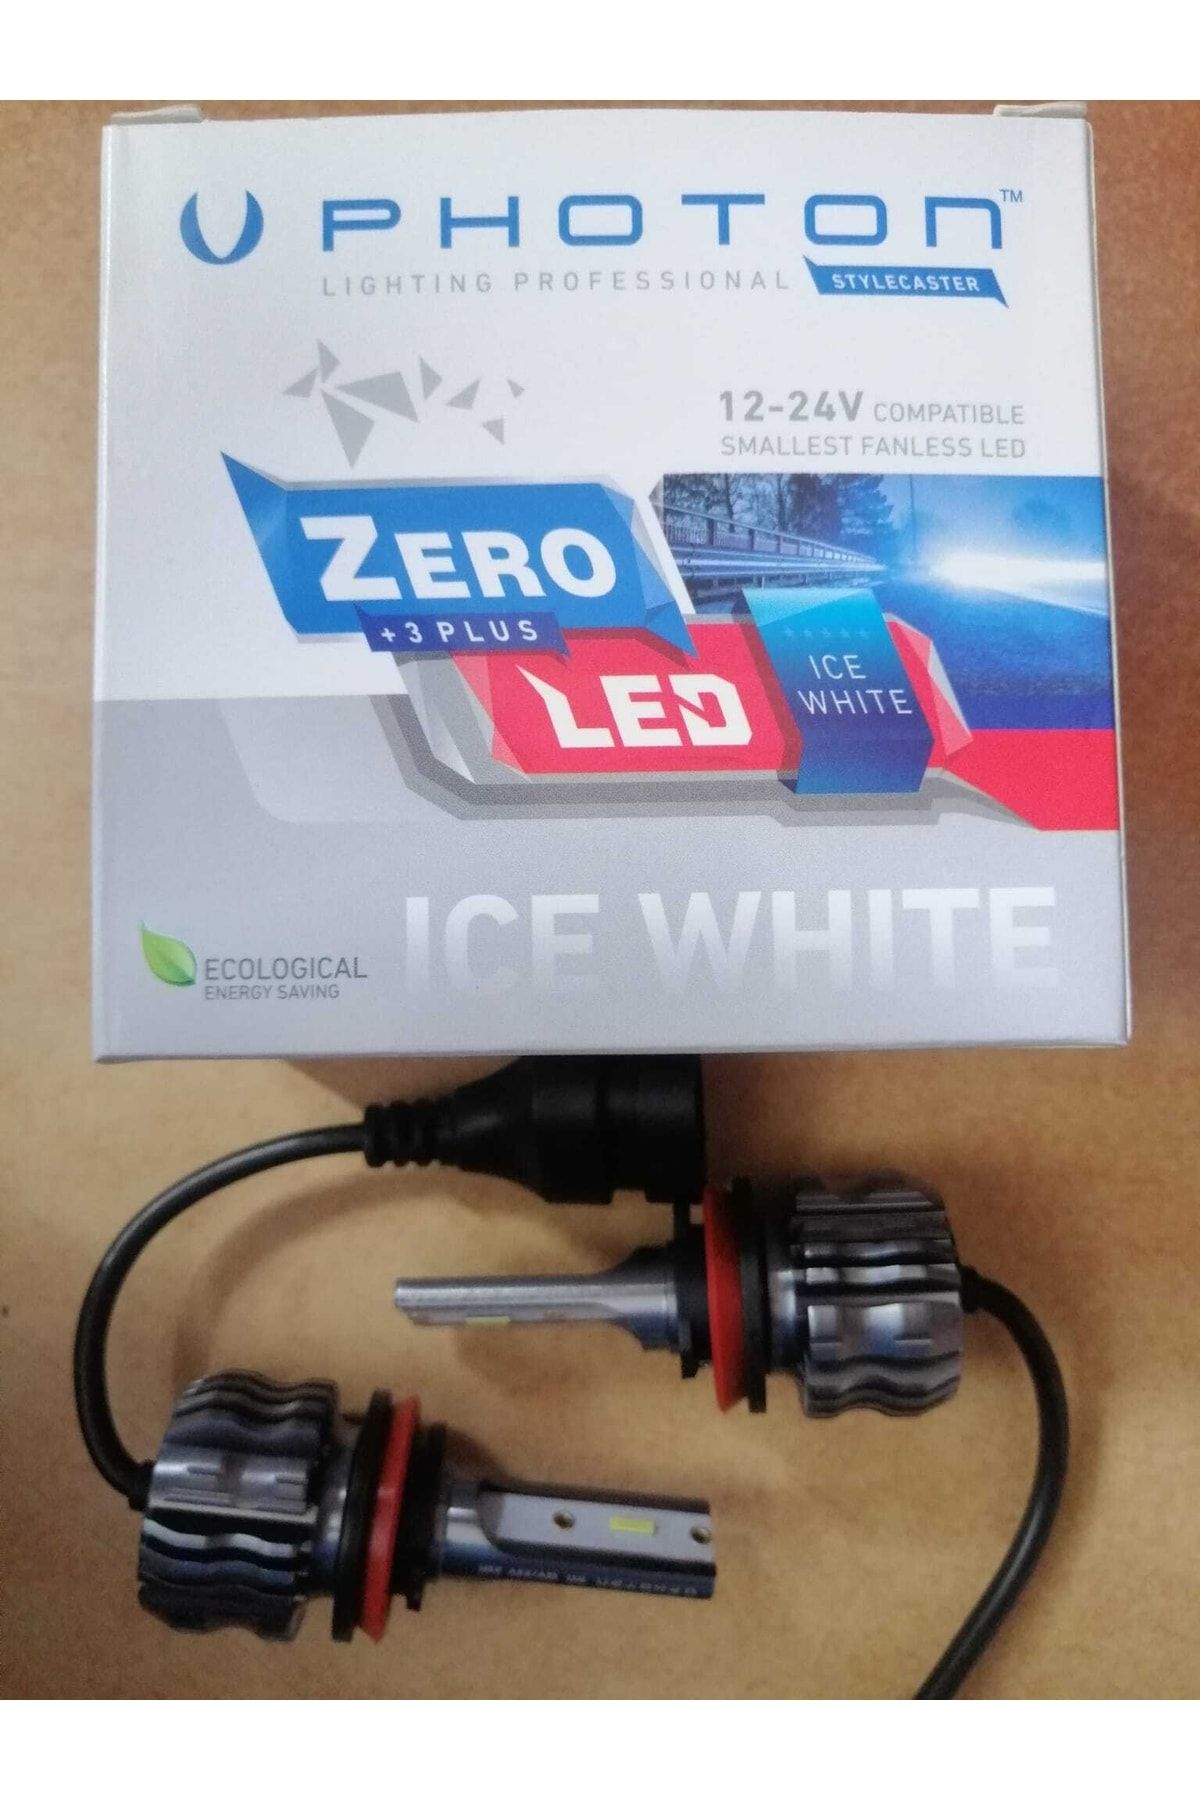 Photon Zero H11 +3 Plus Fansız Led 12volt-24volt Zr3729 Ice White Fansız Uyumlu